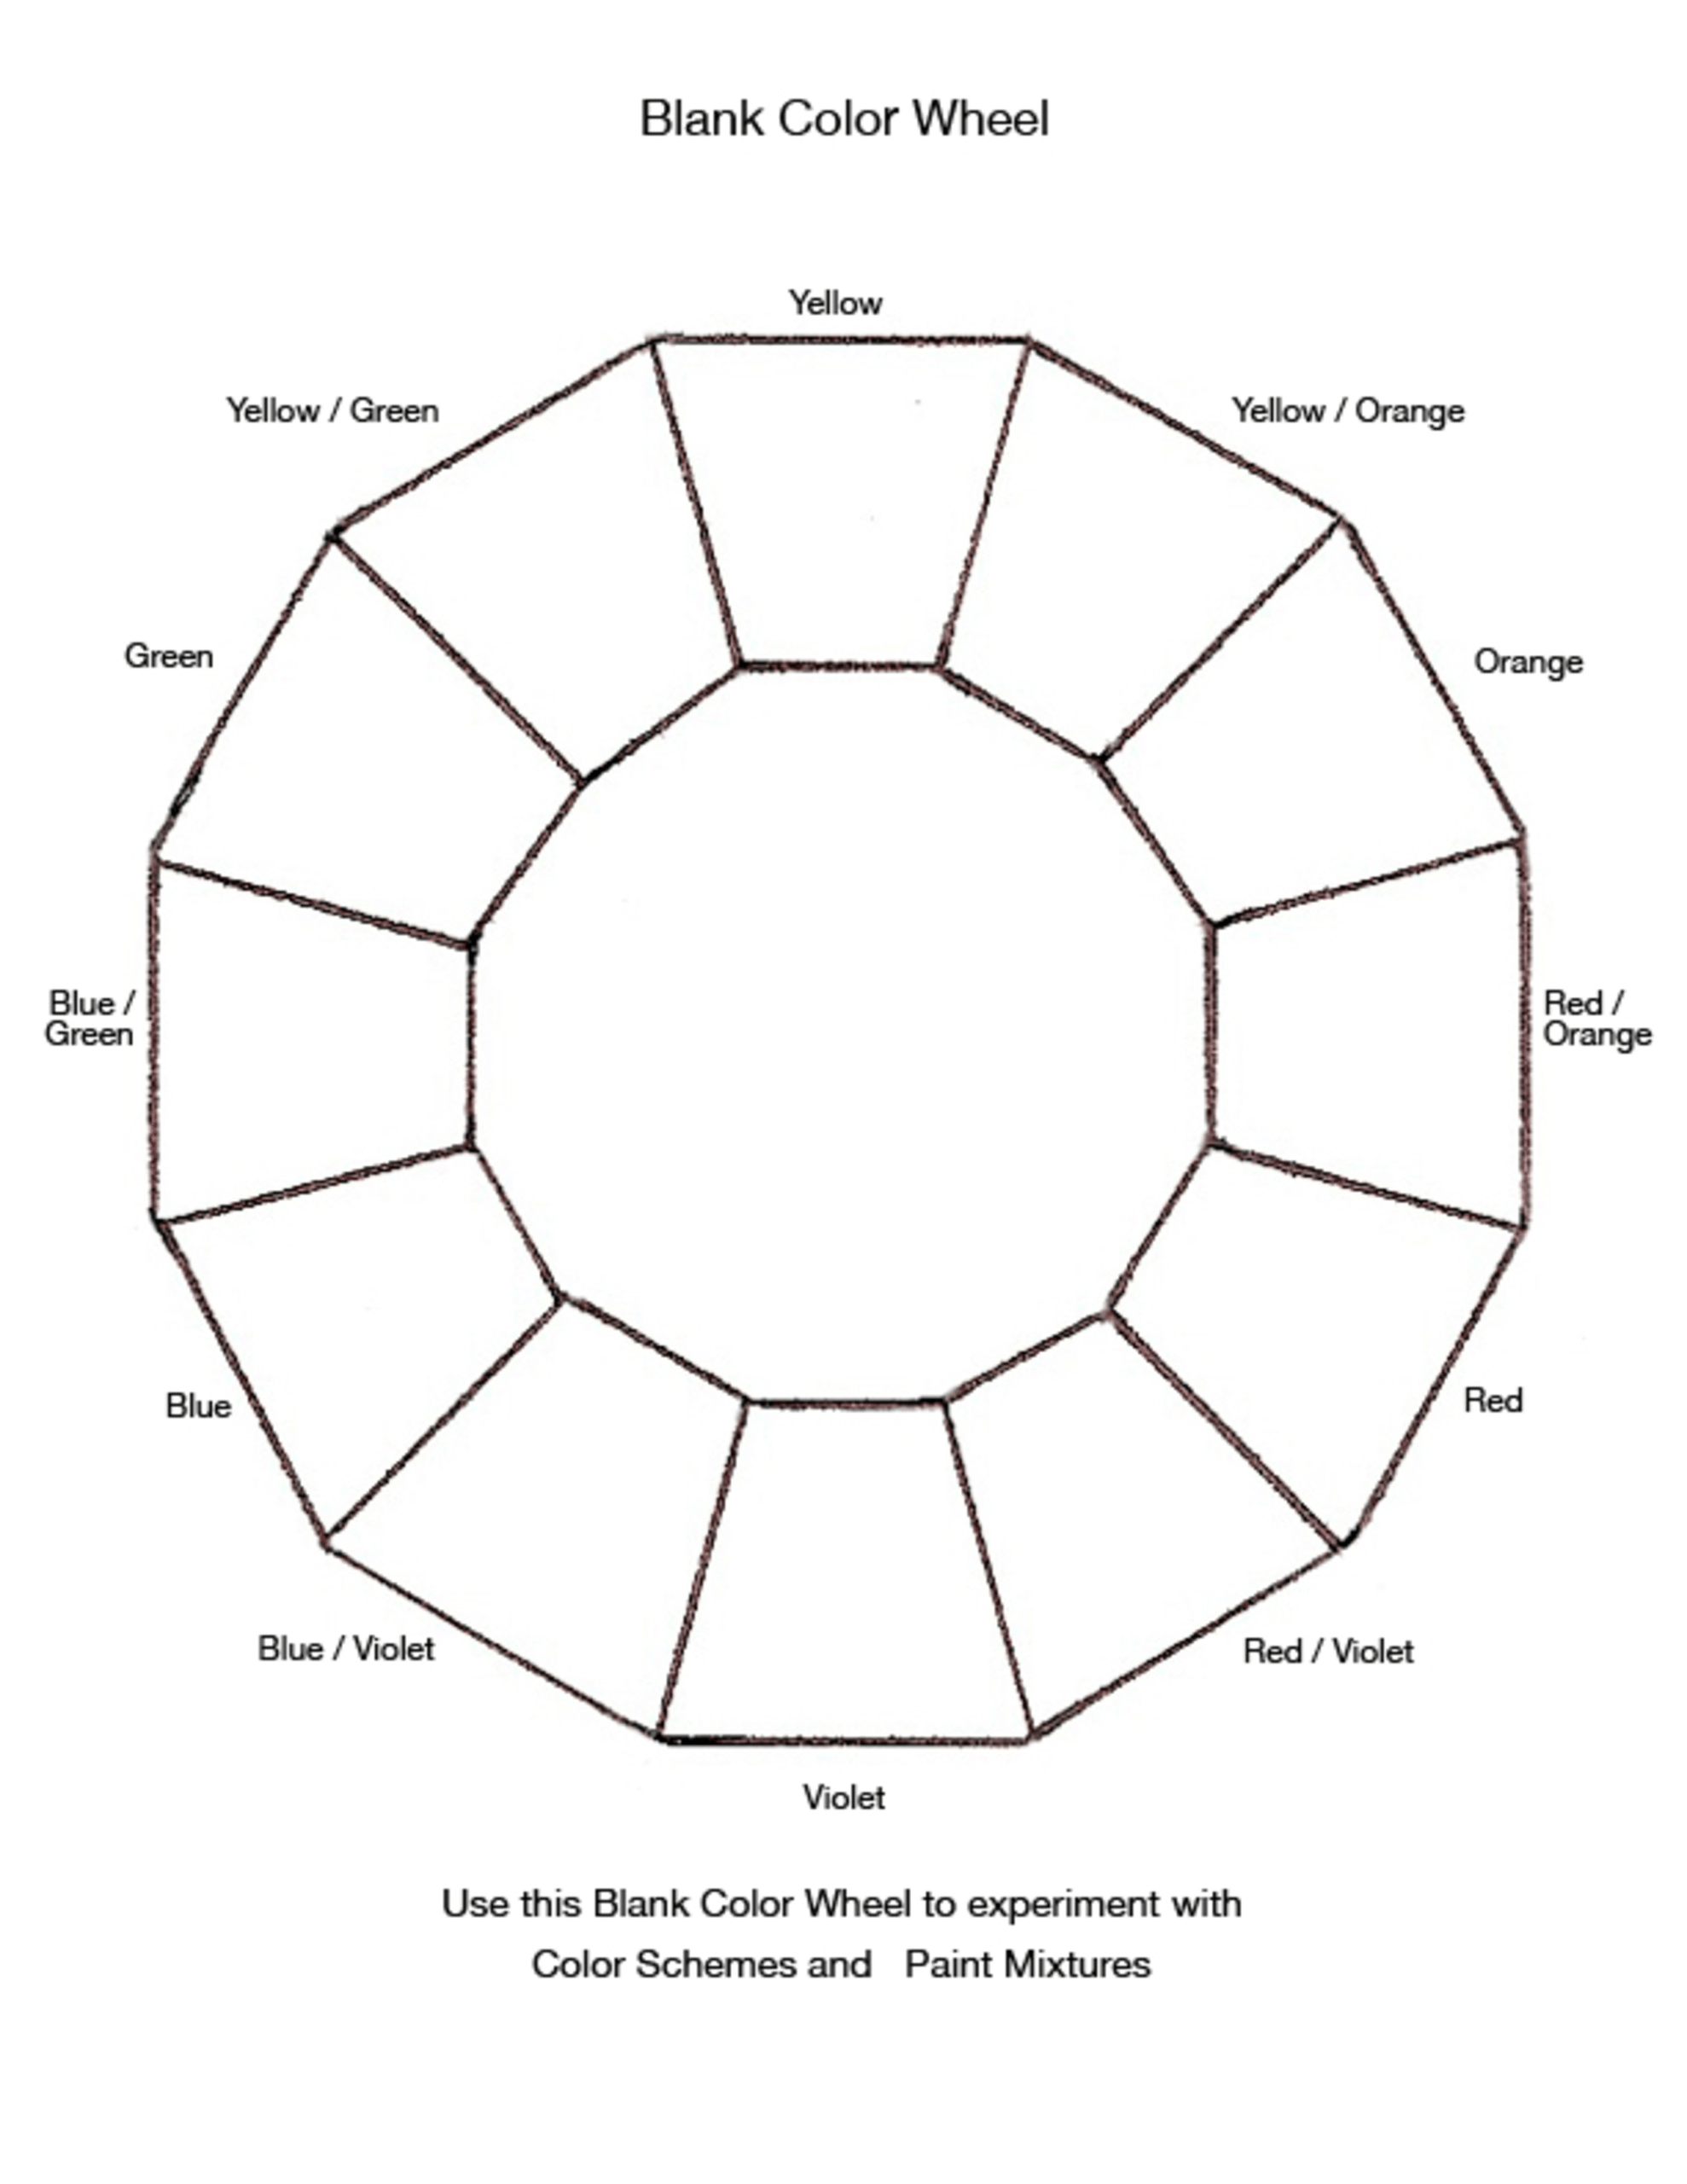 Blank Color Wheel Chart | Templates At Allbusinesstemplates Regarding Blank Color Wheel Template